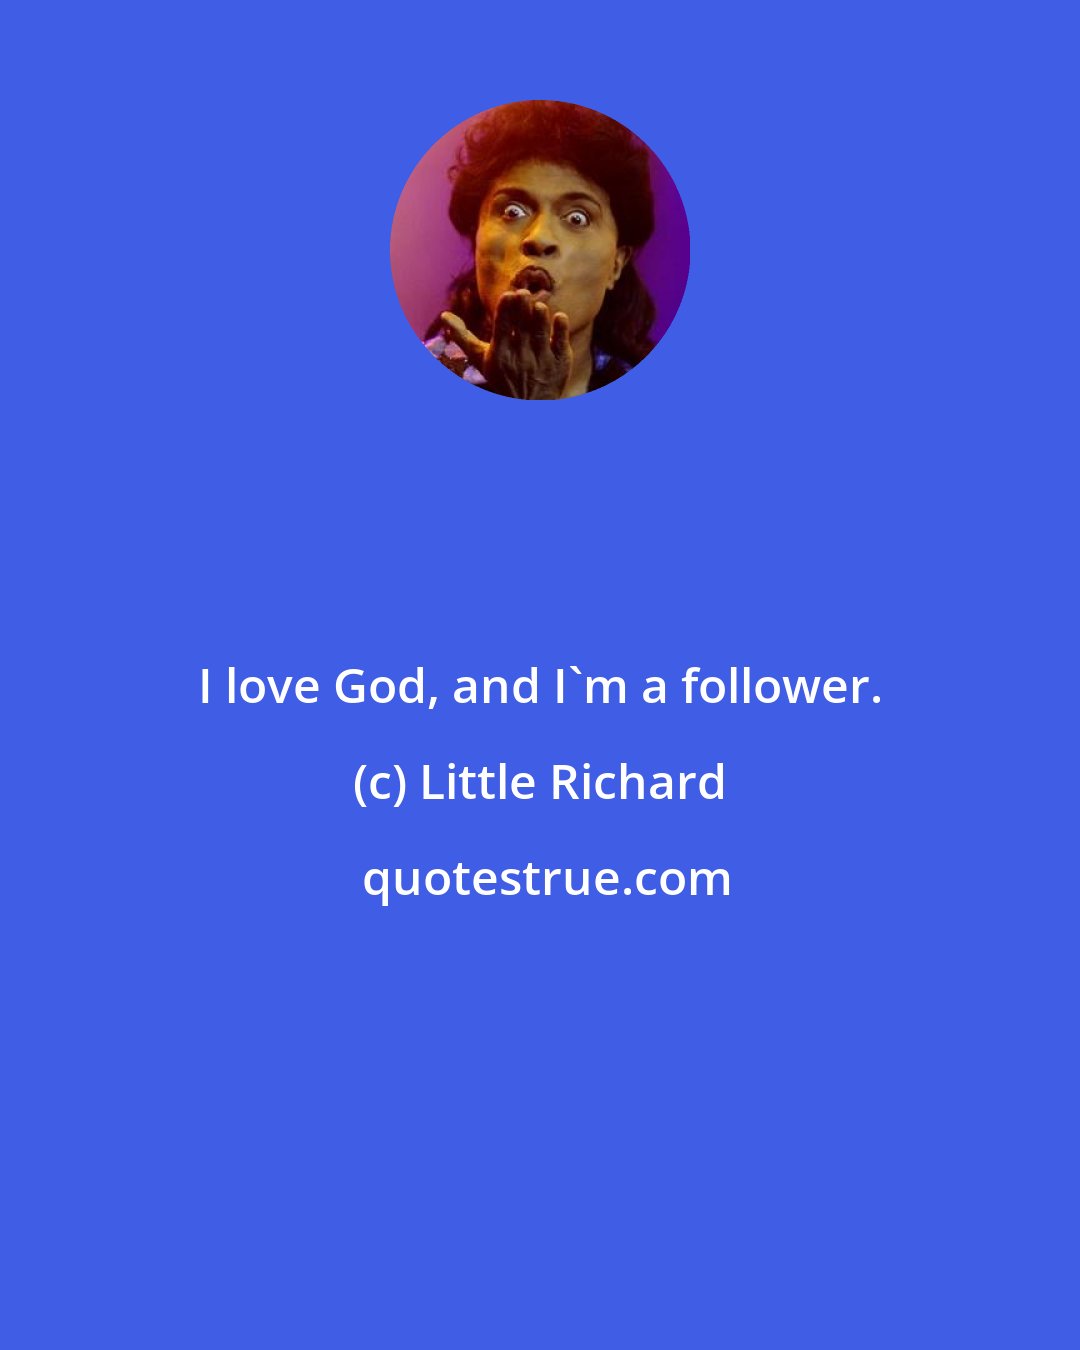 Little Richard: I love God, and I'm a follower.